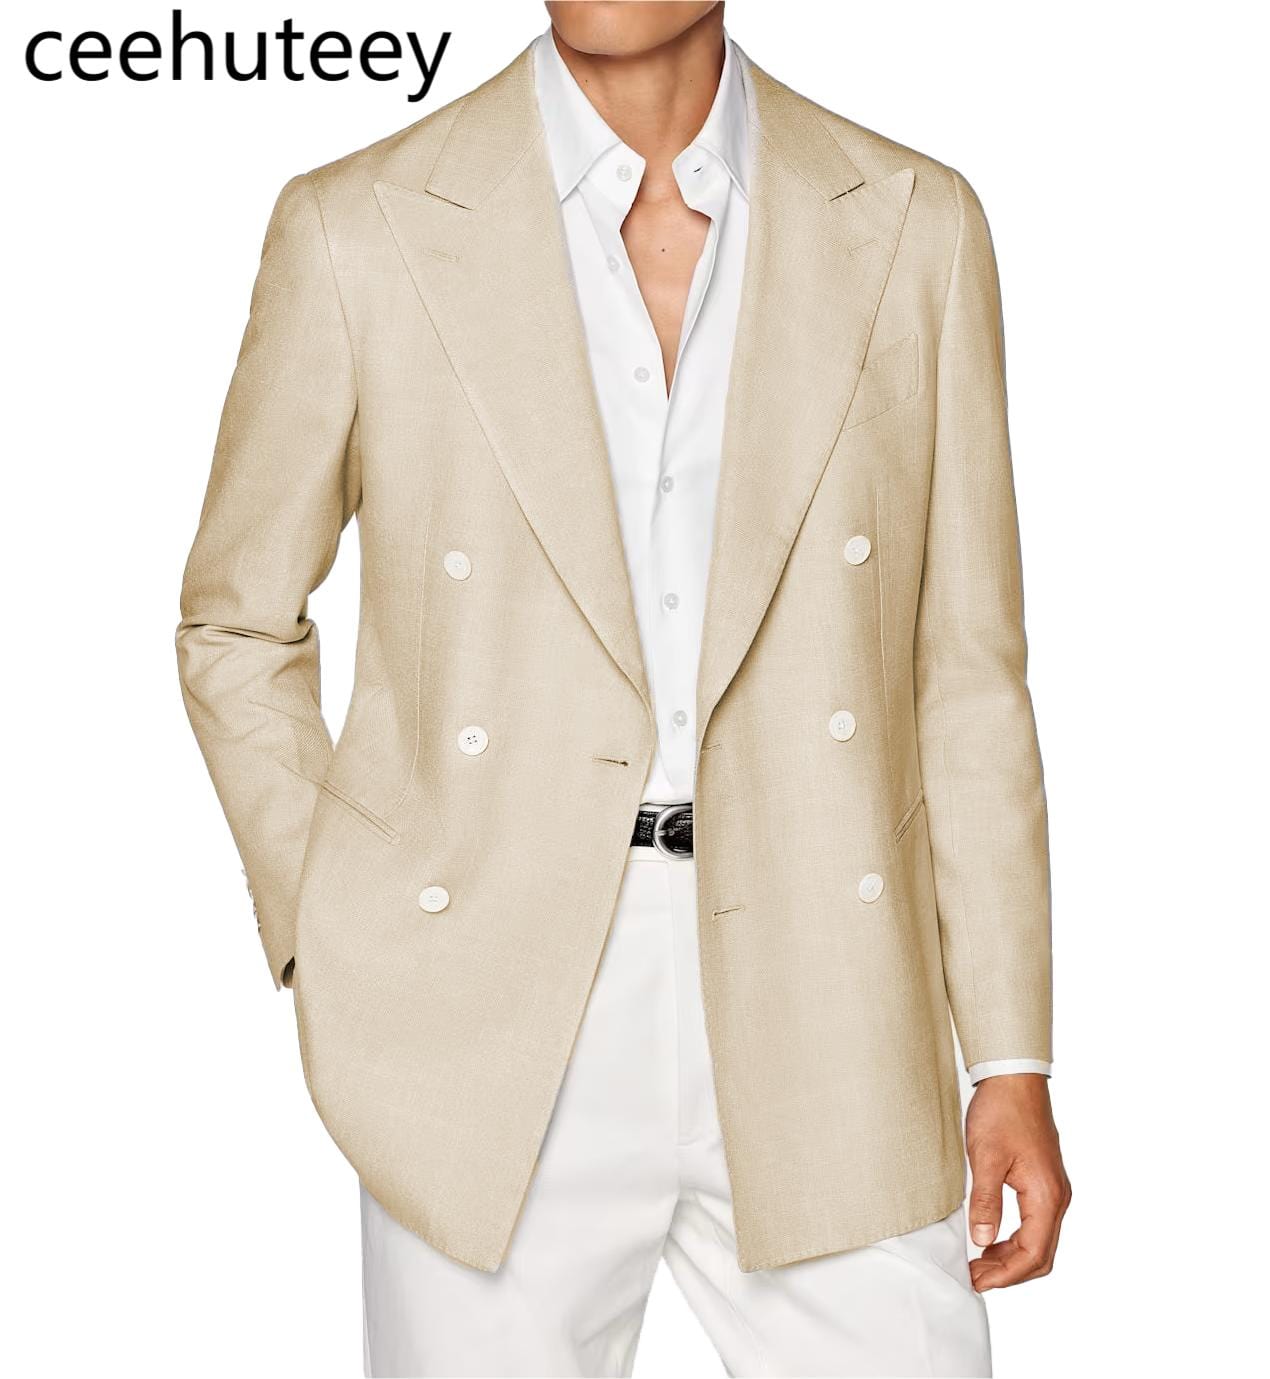 ceehuteey Men's Linen Fashion Notch Lapel Double Breasted Solid Blazer